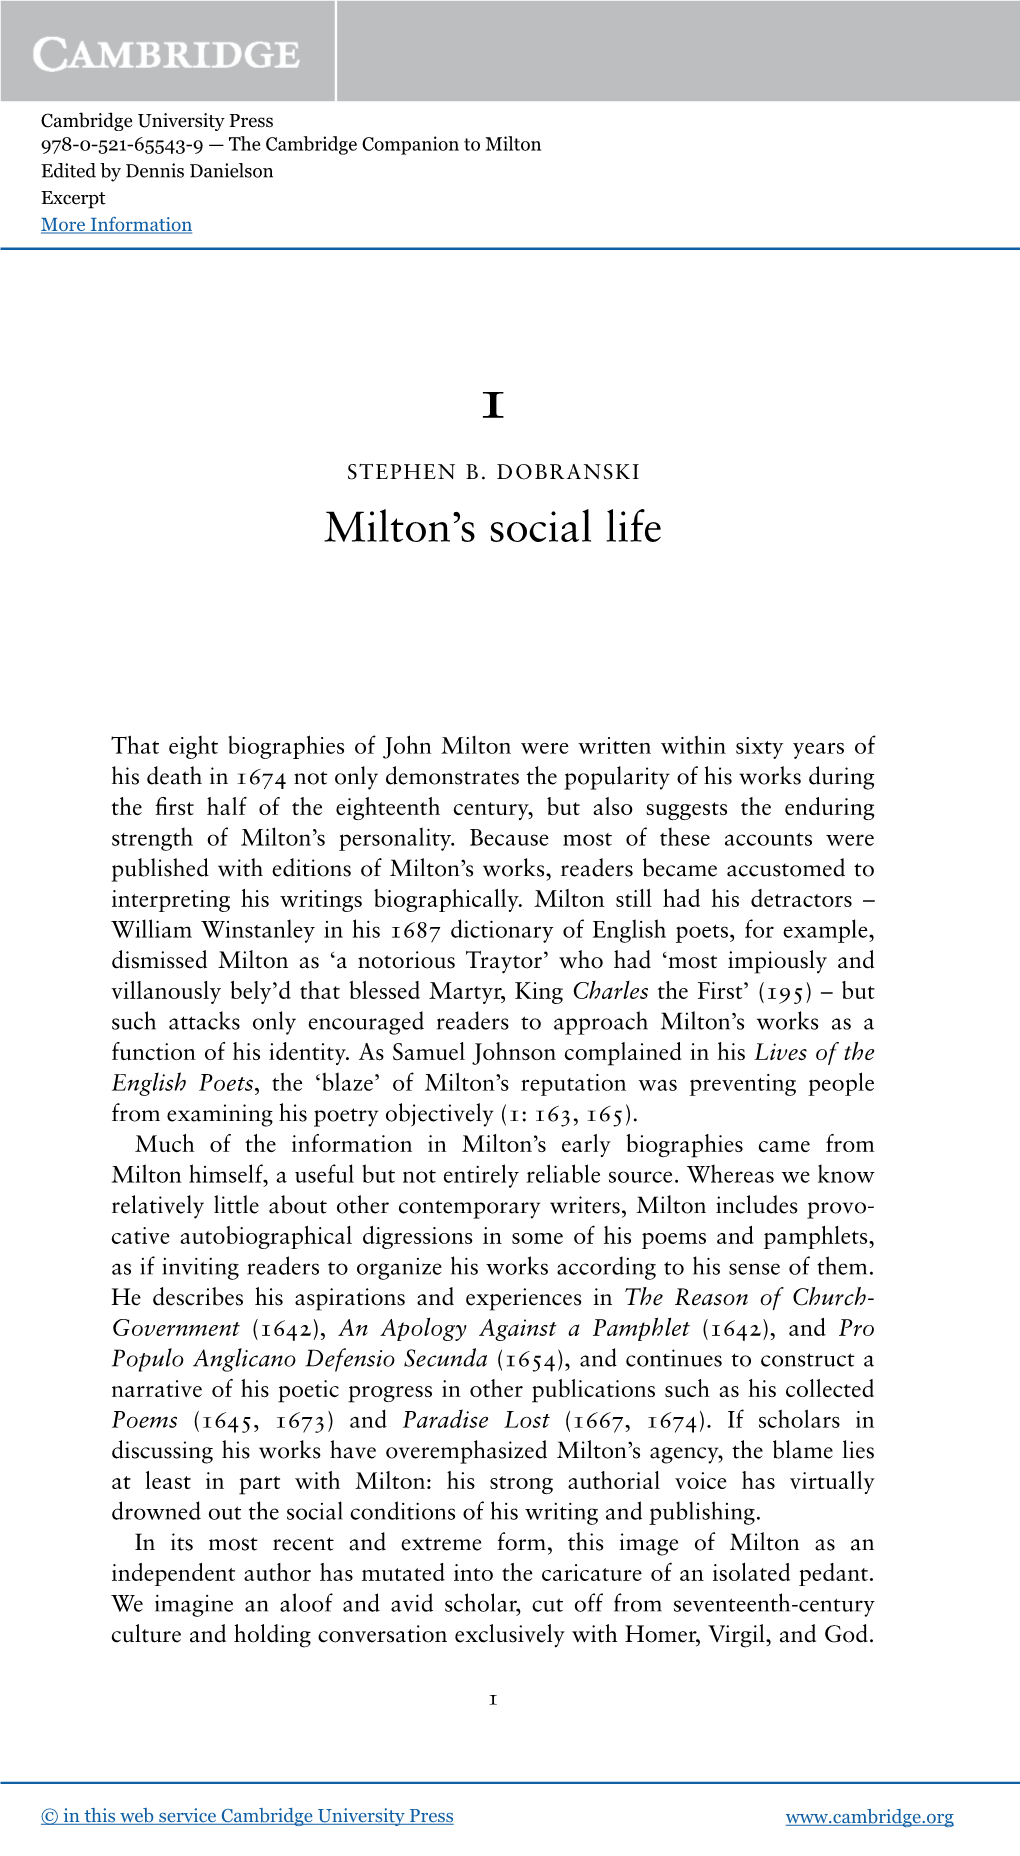 Milton's Social Life